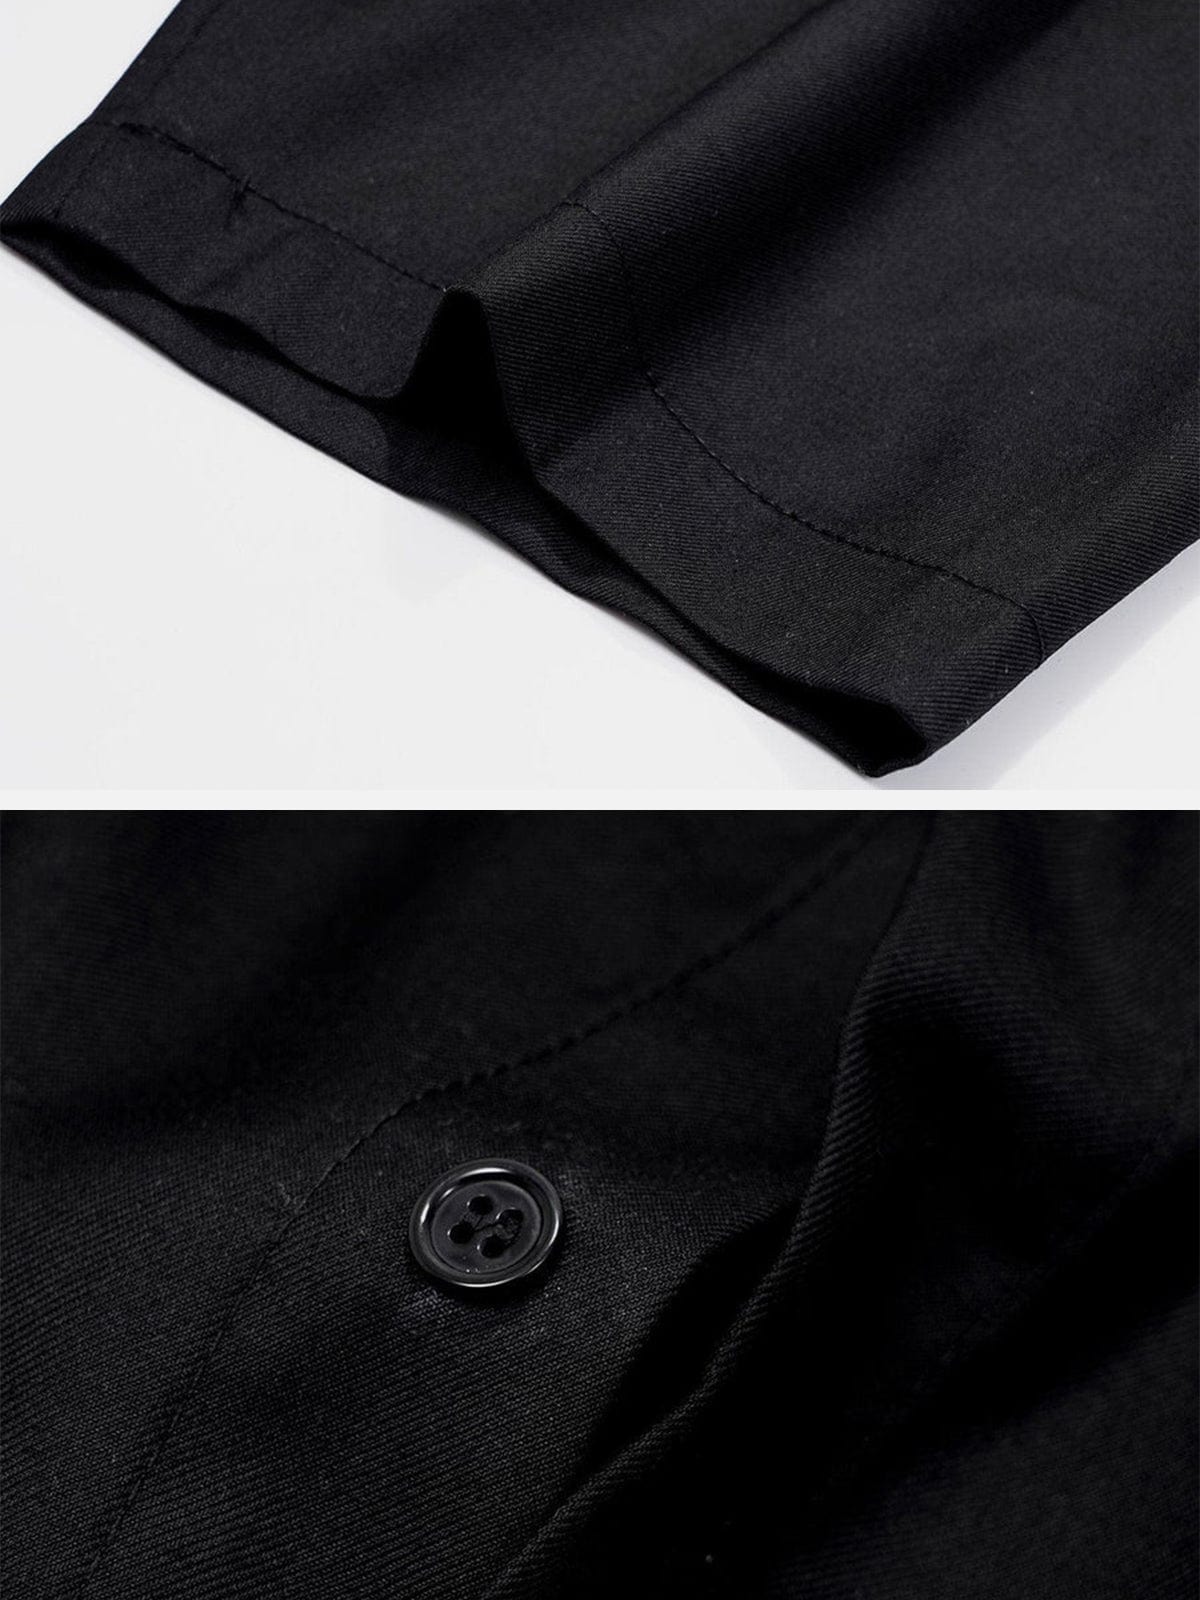 Dark Solid Color Shirt Streetwear Brand Techwear Combat Tactical YUGEN THEORY